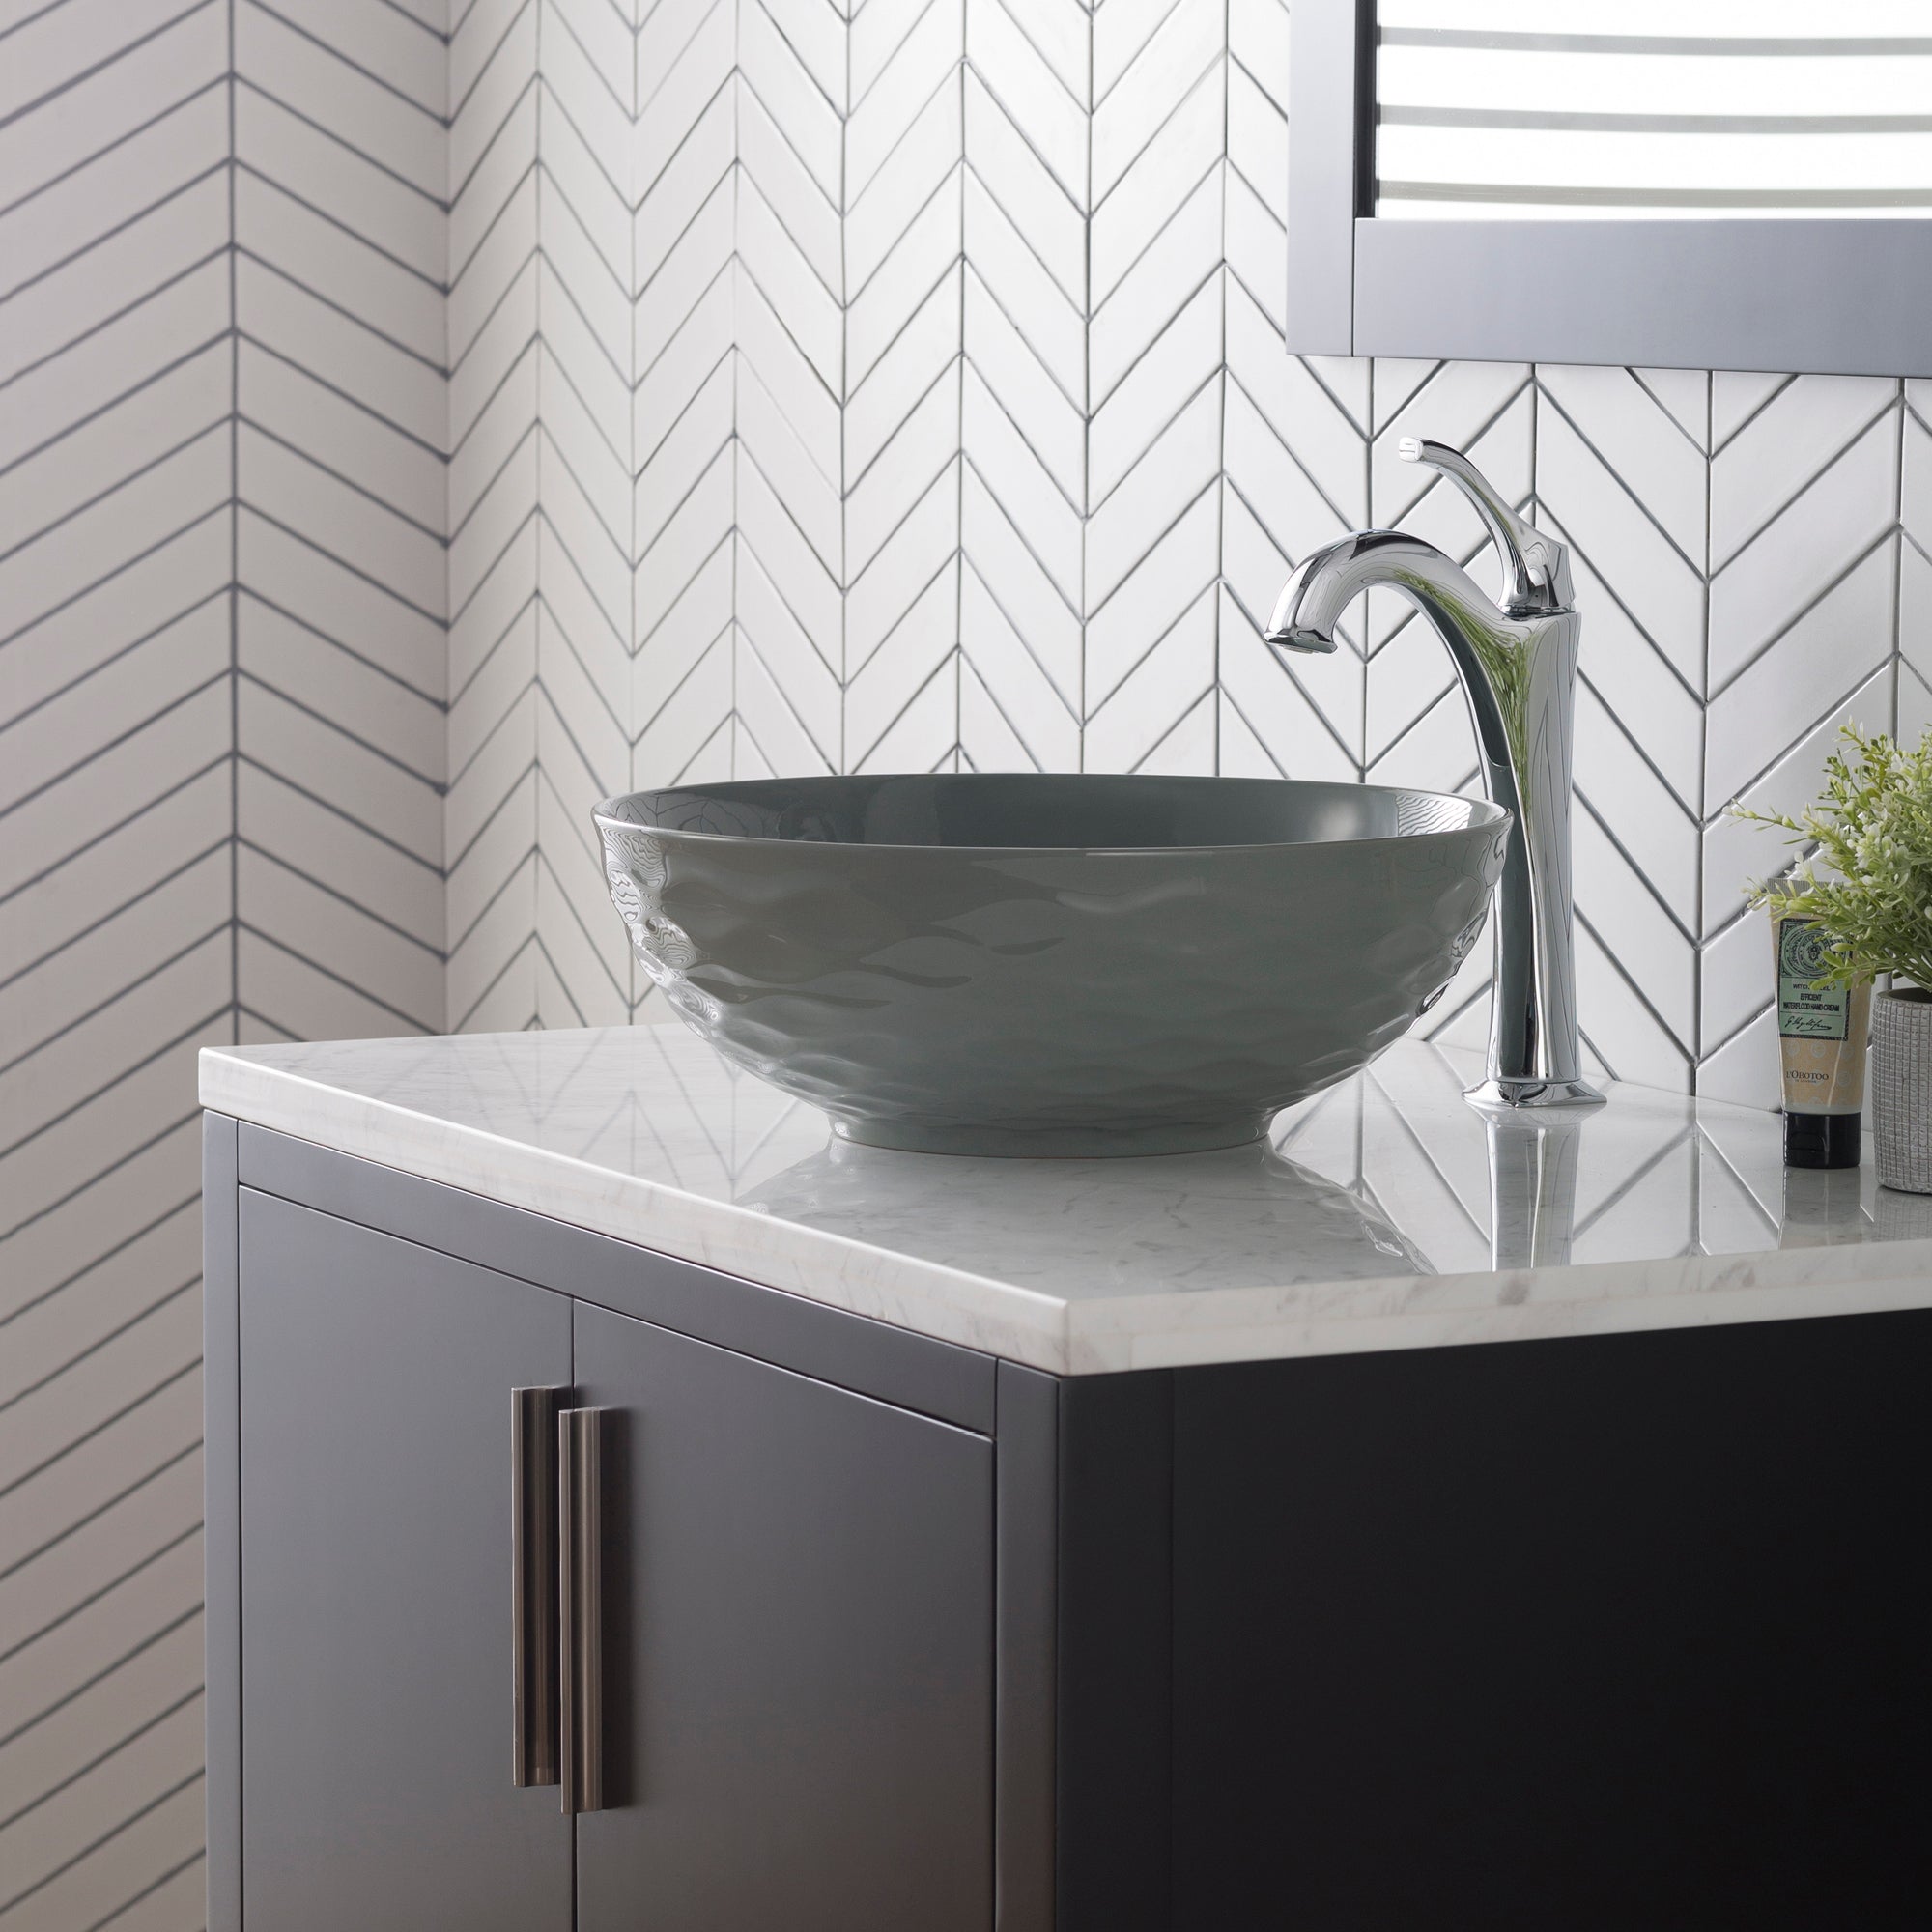 KRAUS Viva Round Gray Porcelain Ceramic Vessel Bathroom Sink with Pop-Up Drain-Bathroom Sinks-DirectSinks